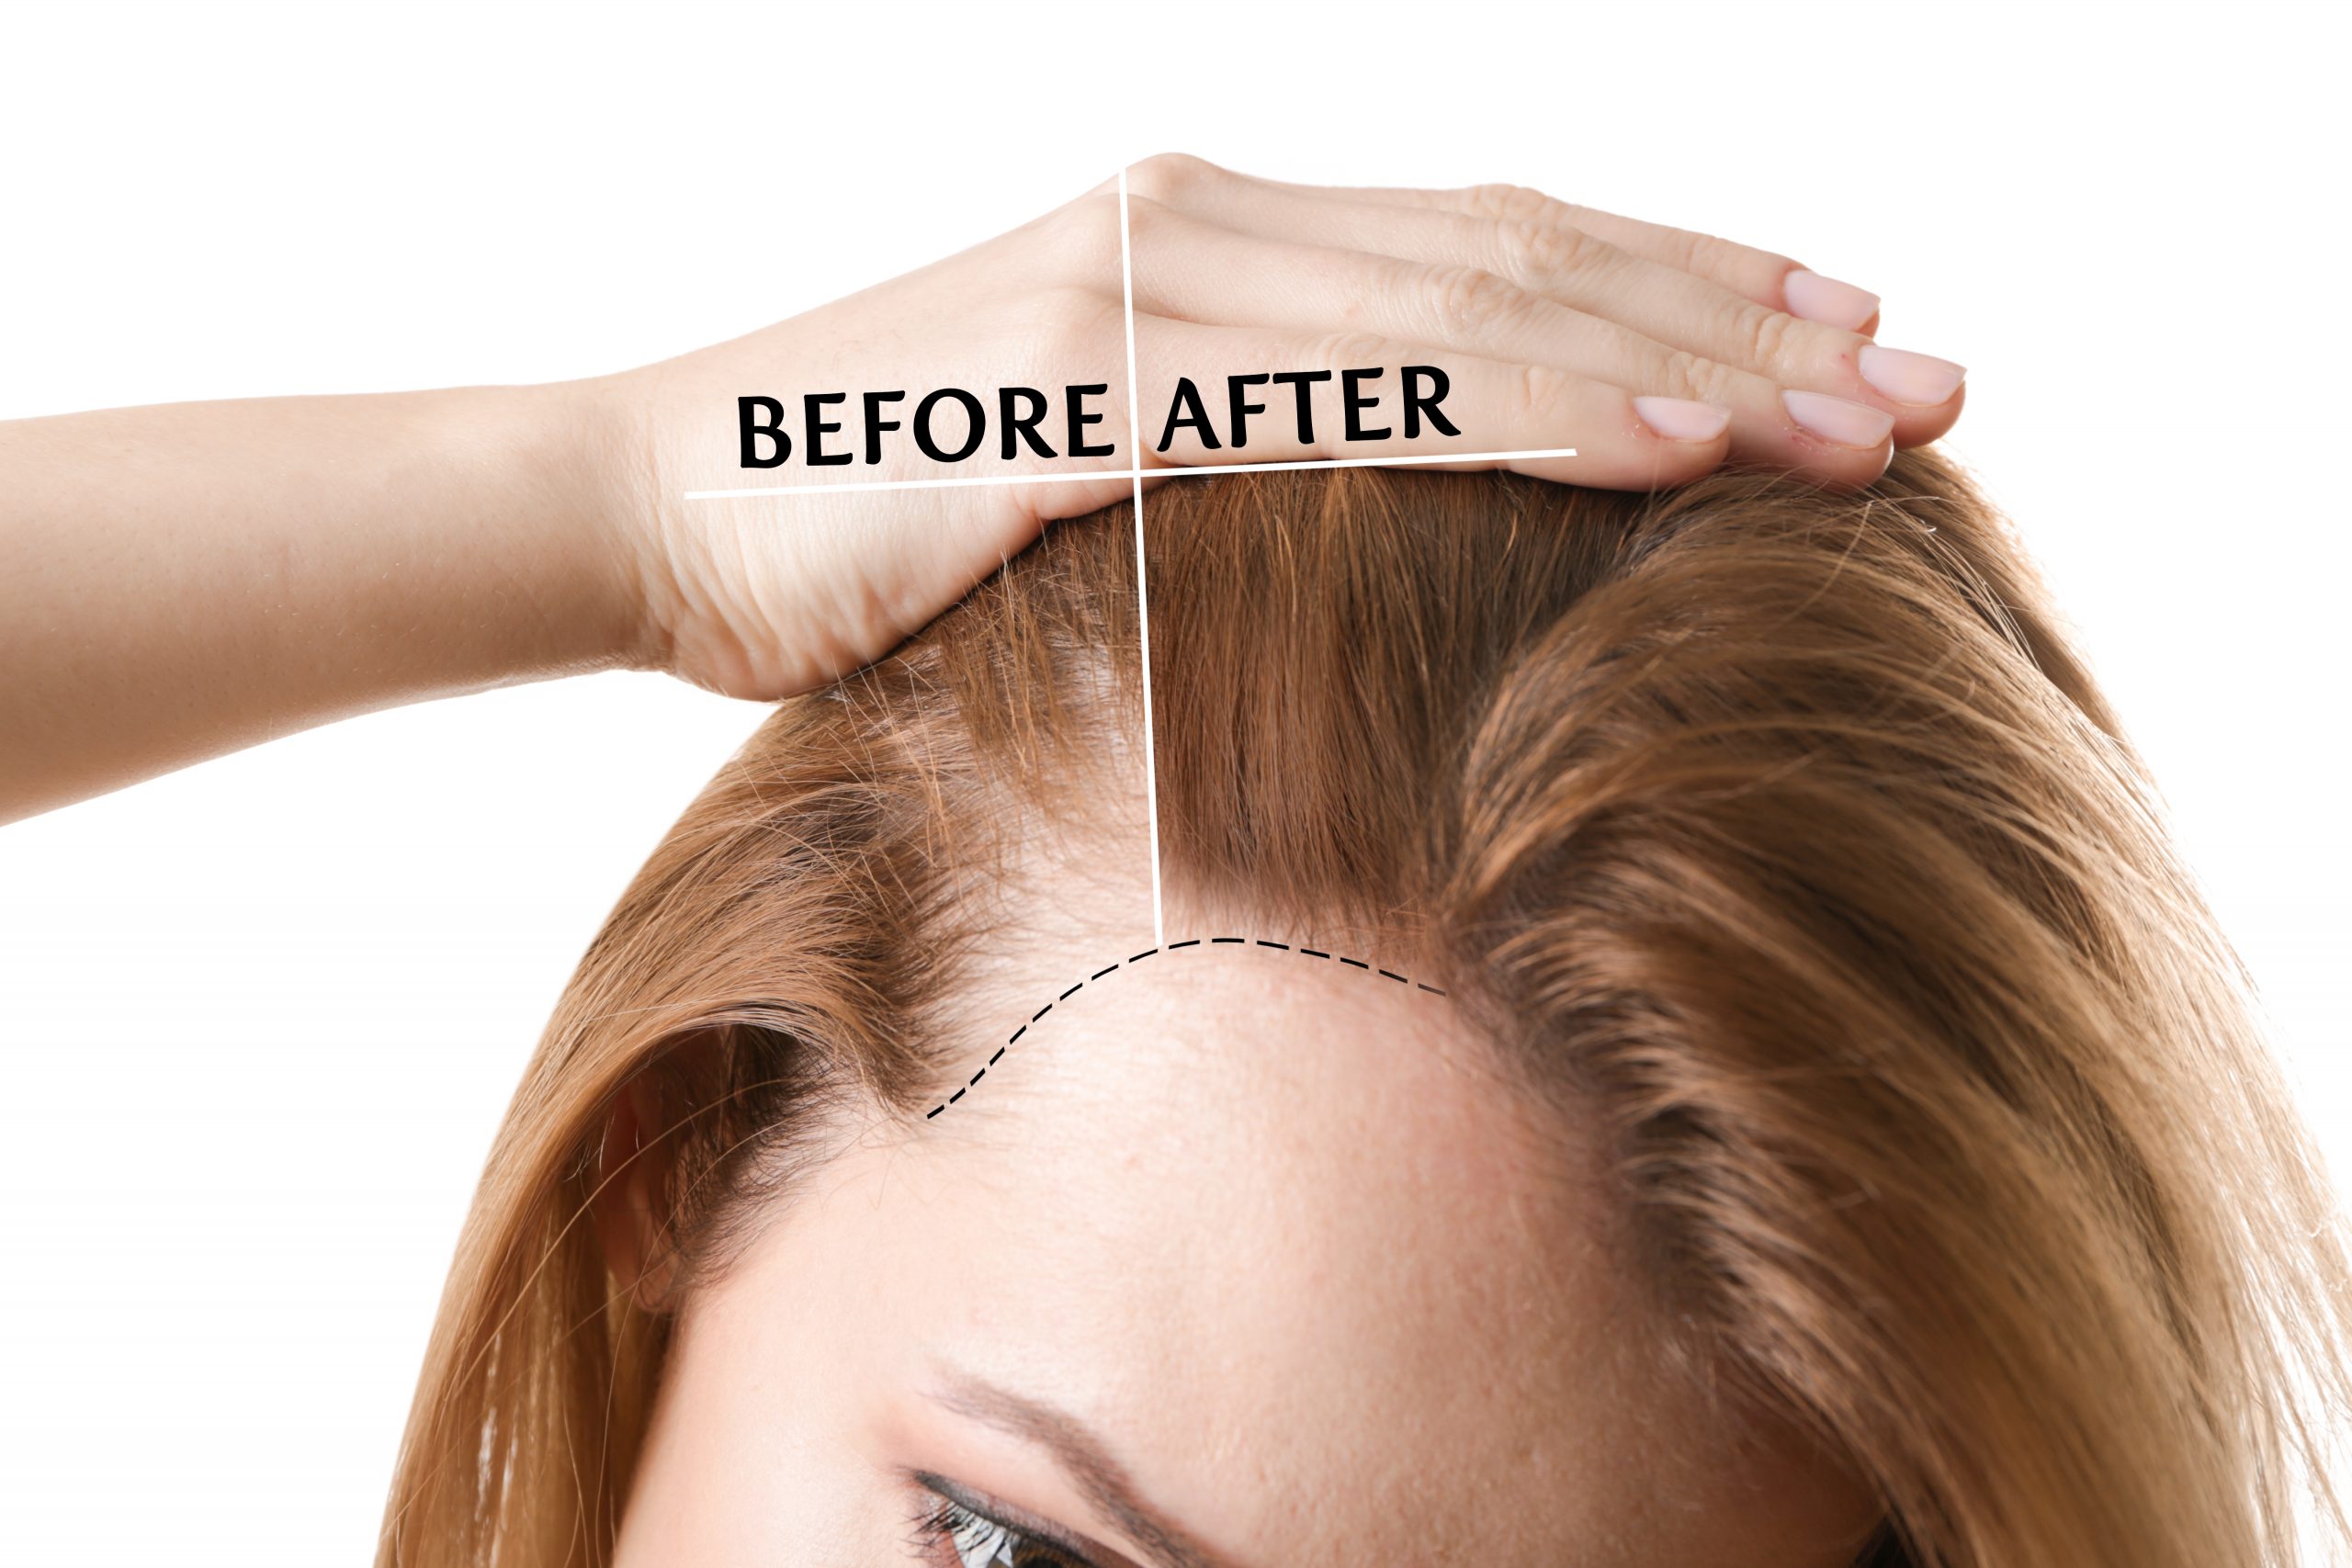 Surgical hair restoration